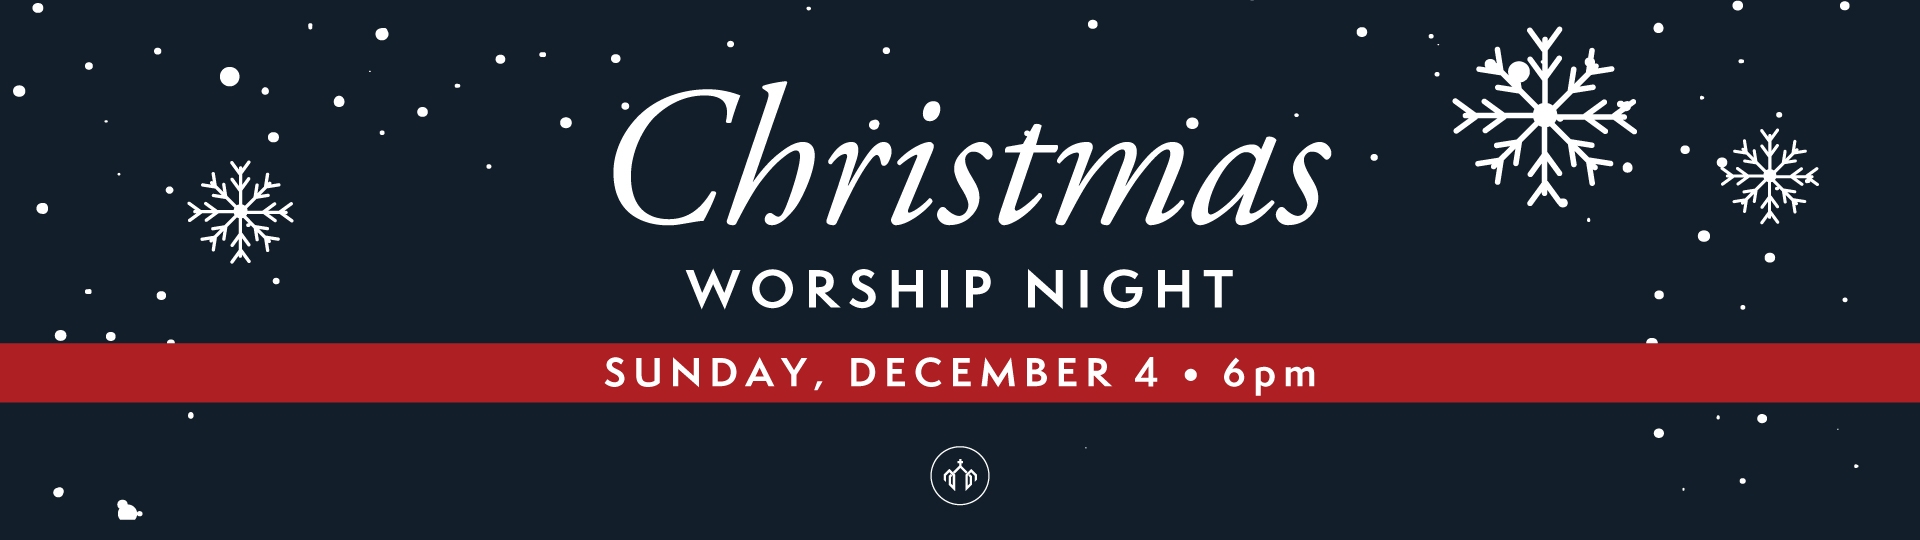 Christmas Worship Night - Sunday, December 4 at 6pm